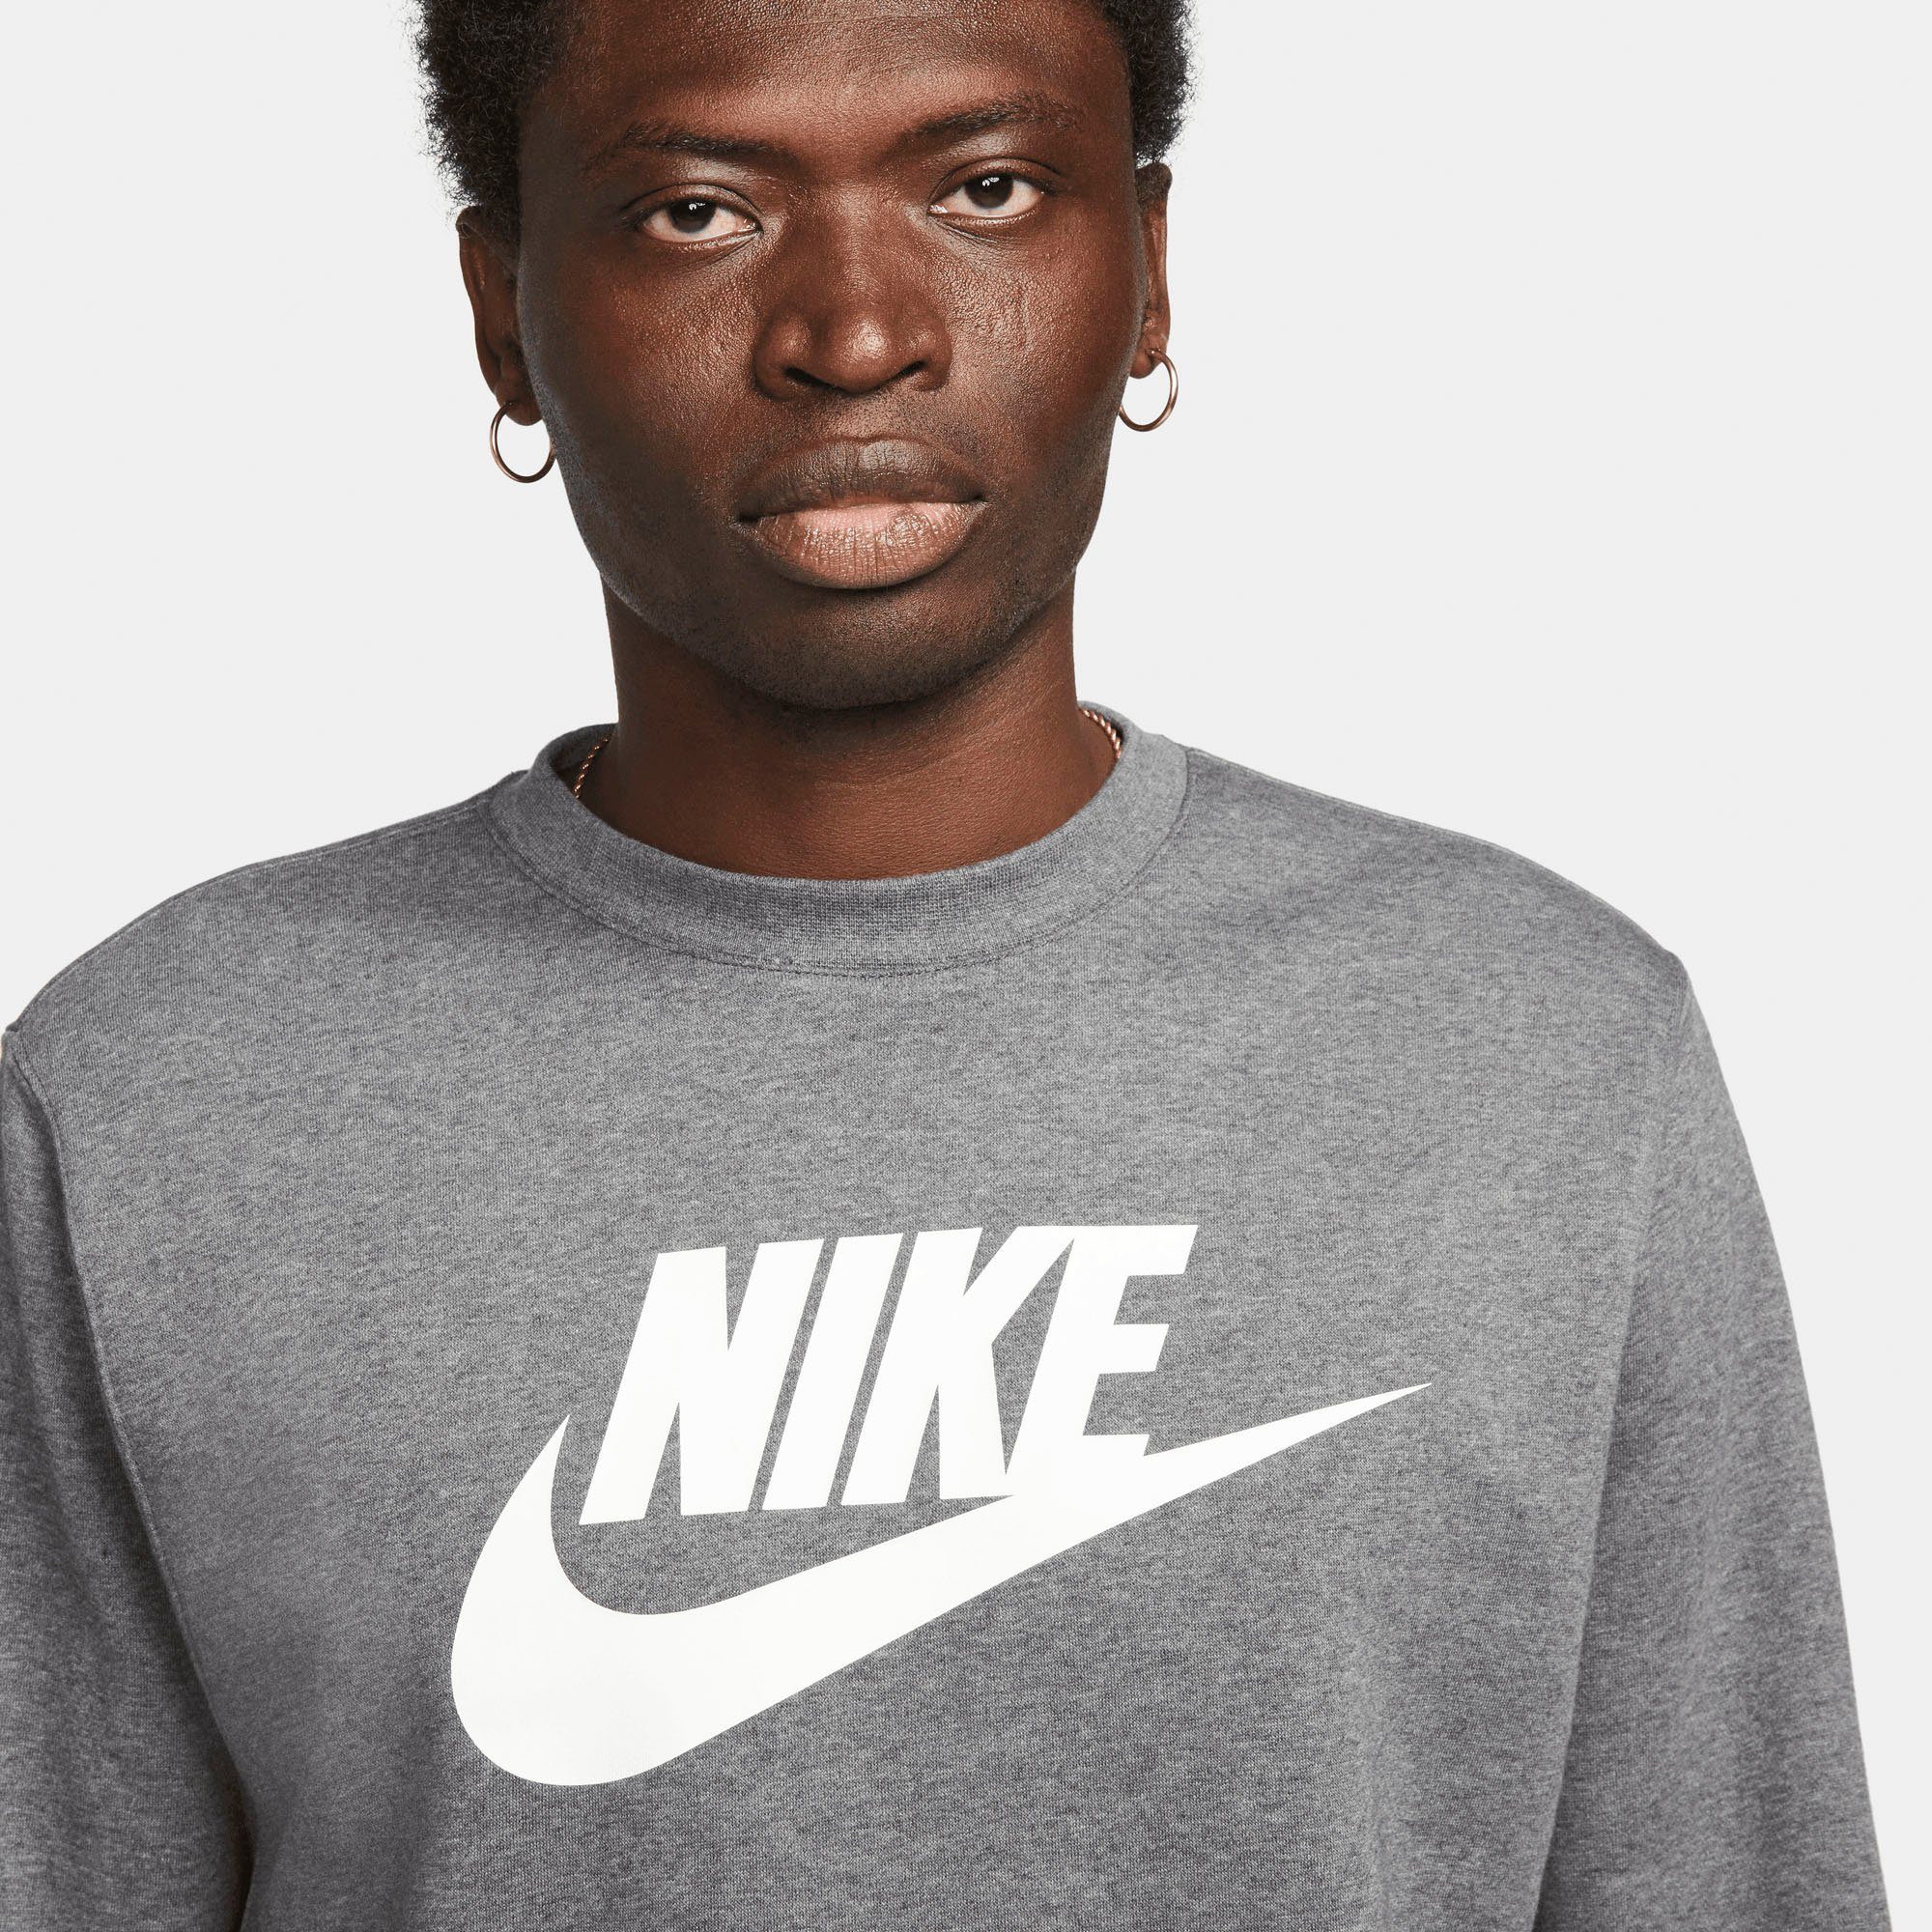 Nike Sportswear Sweatshirt Club Fleece Men's CHARCOAL Crew HEATHR Graphic